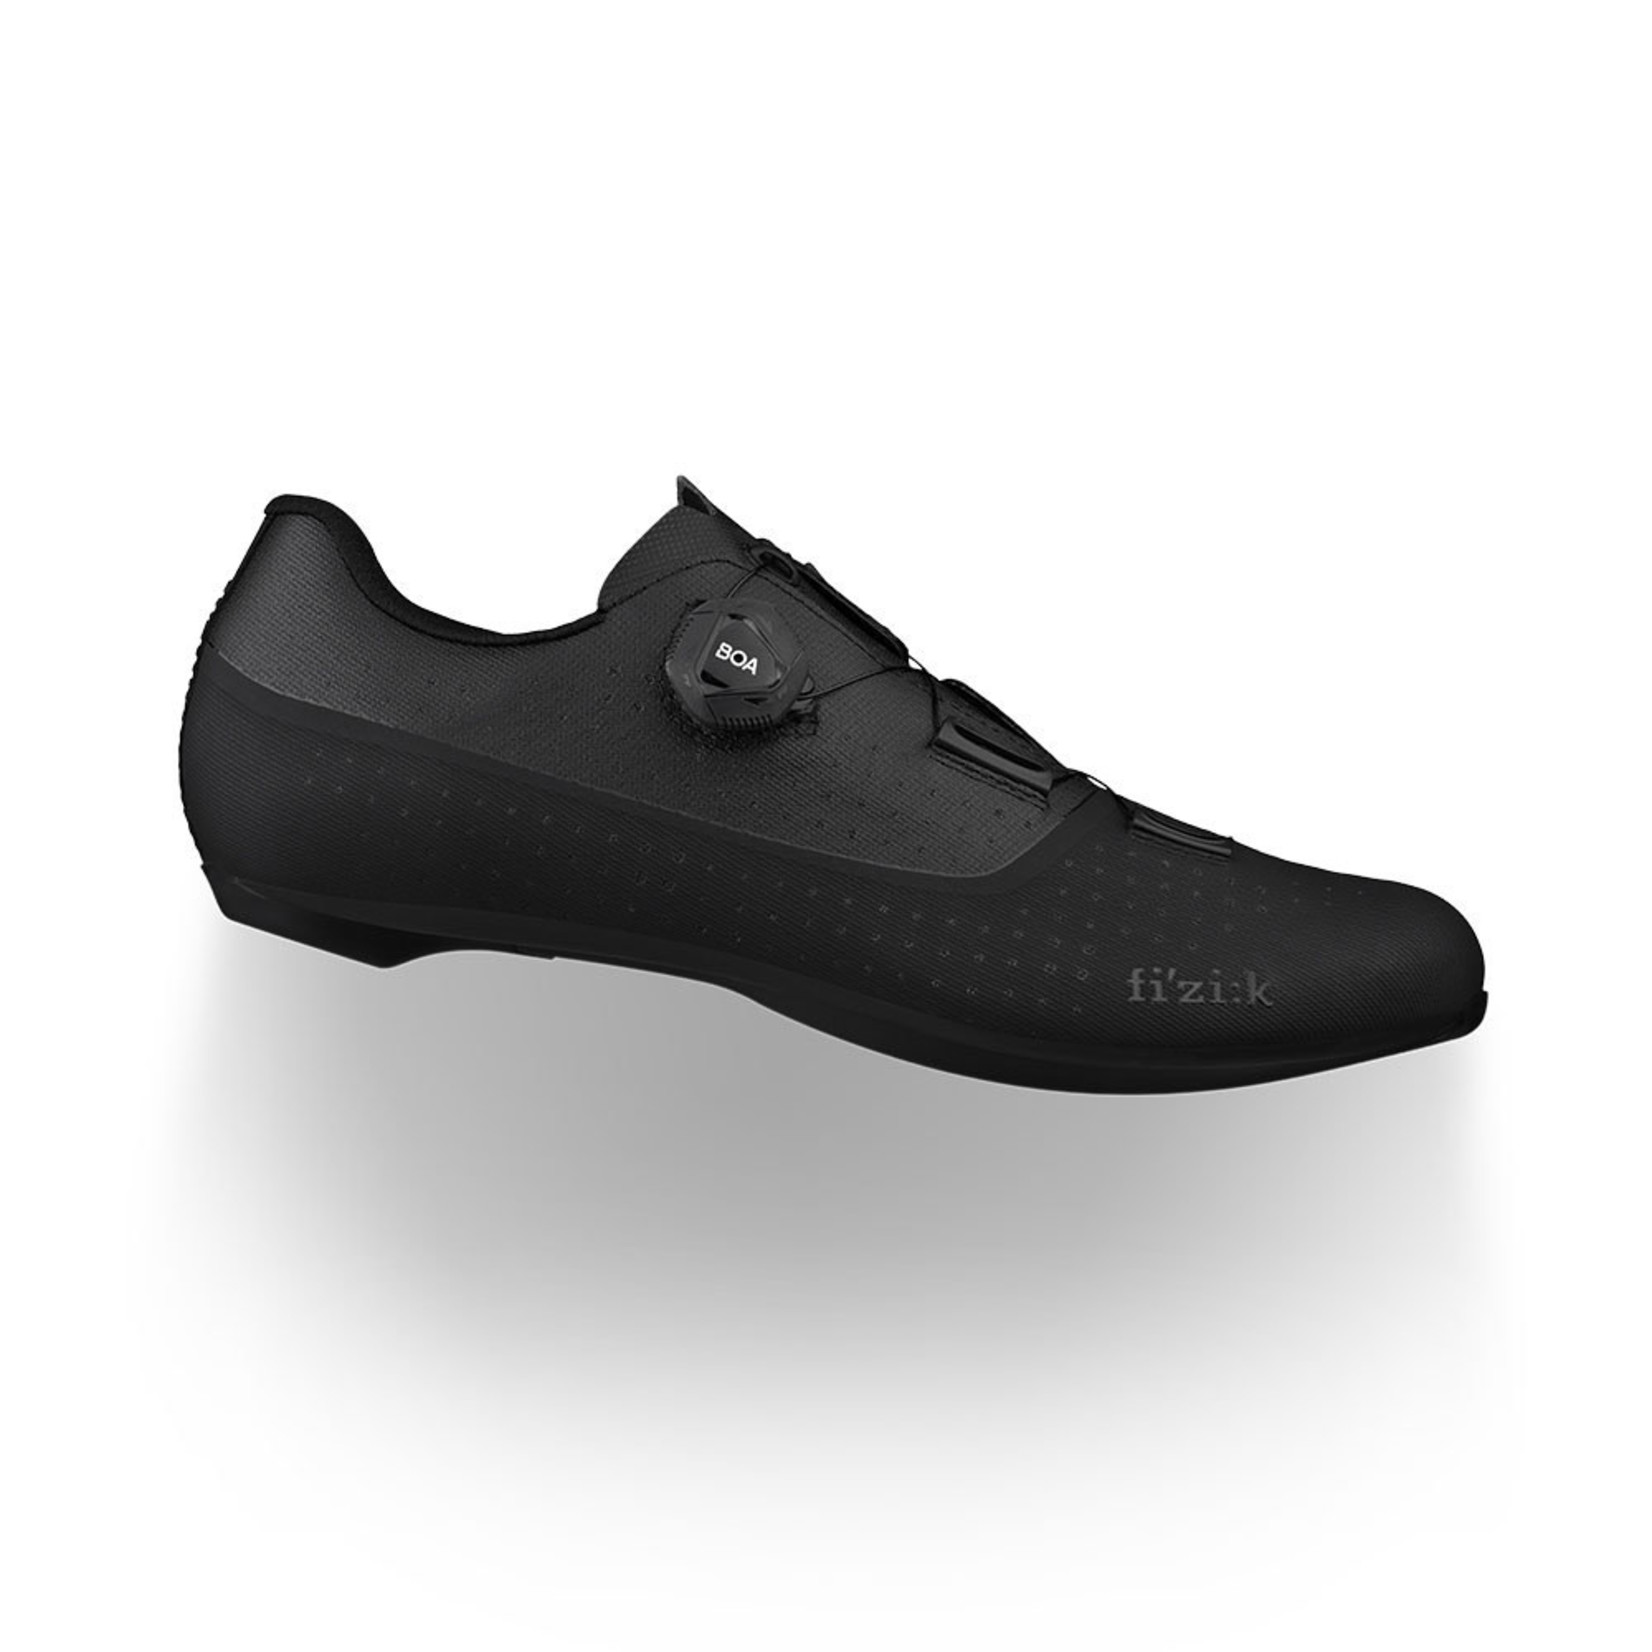 Fizik Fizik Tempo Wide Oc R4 Outsole Carbon Road Bike/Cycling Shoes - Black/Black